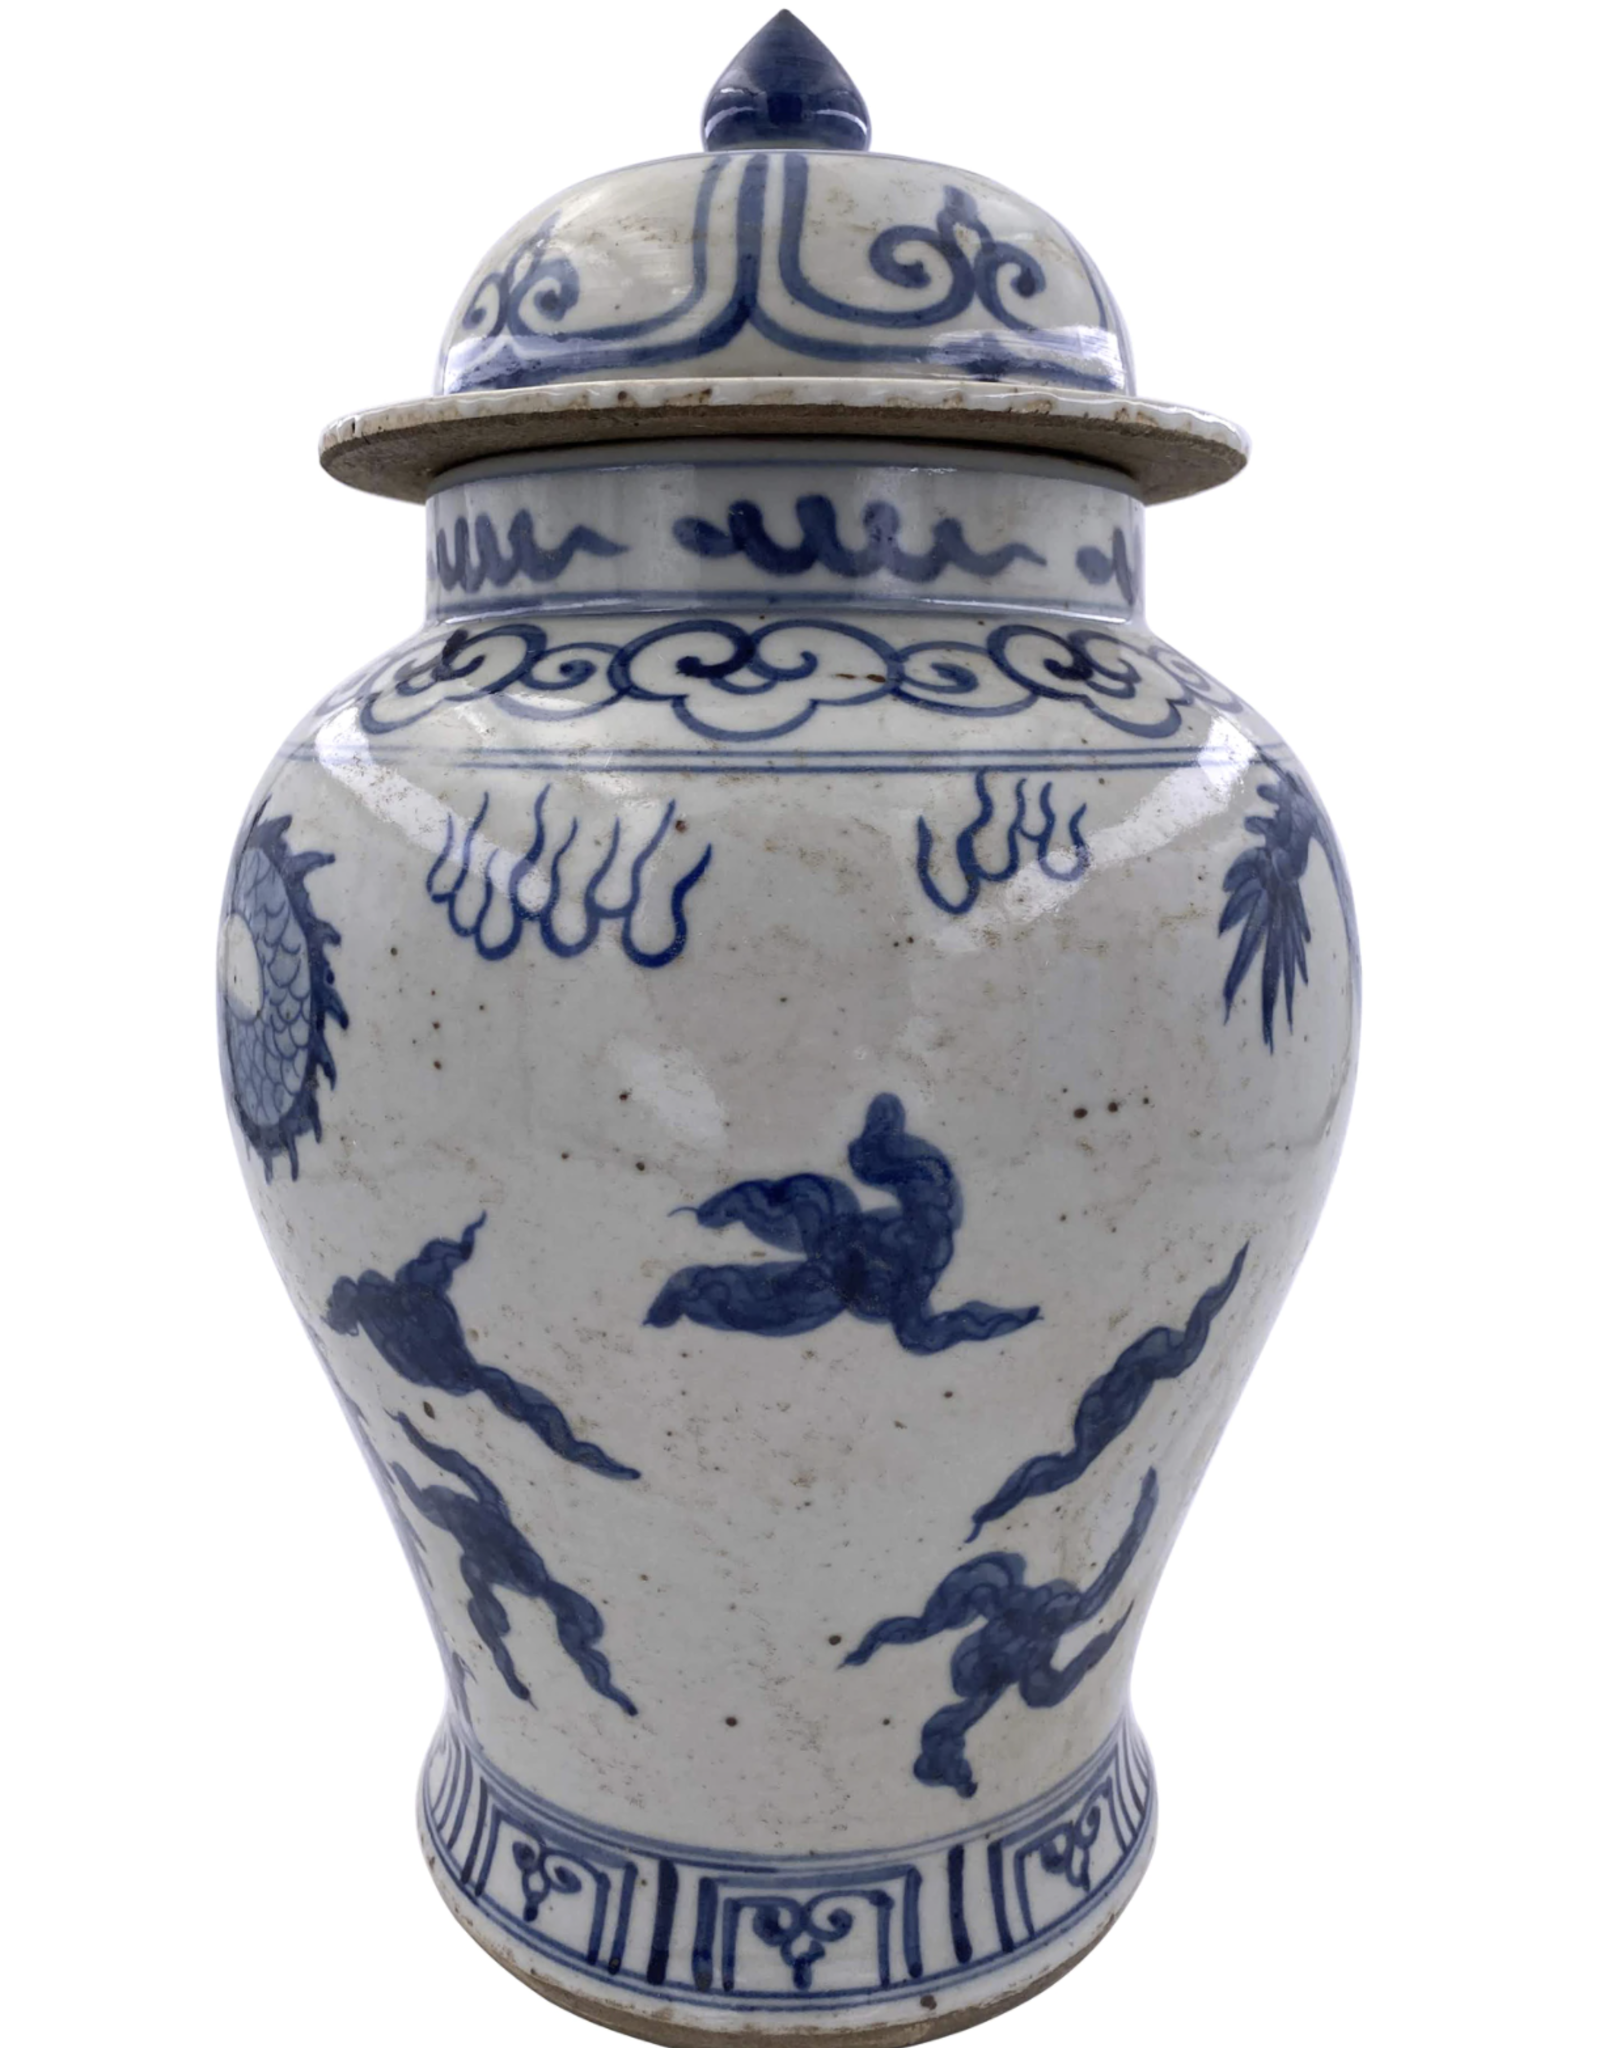 Blue & White Porcelain Temple Jar w/ Dragon - Small